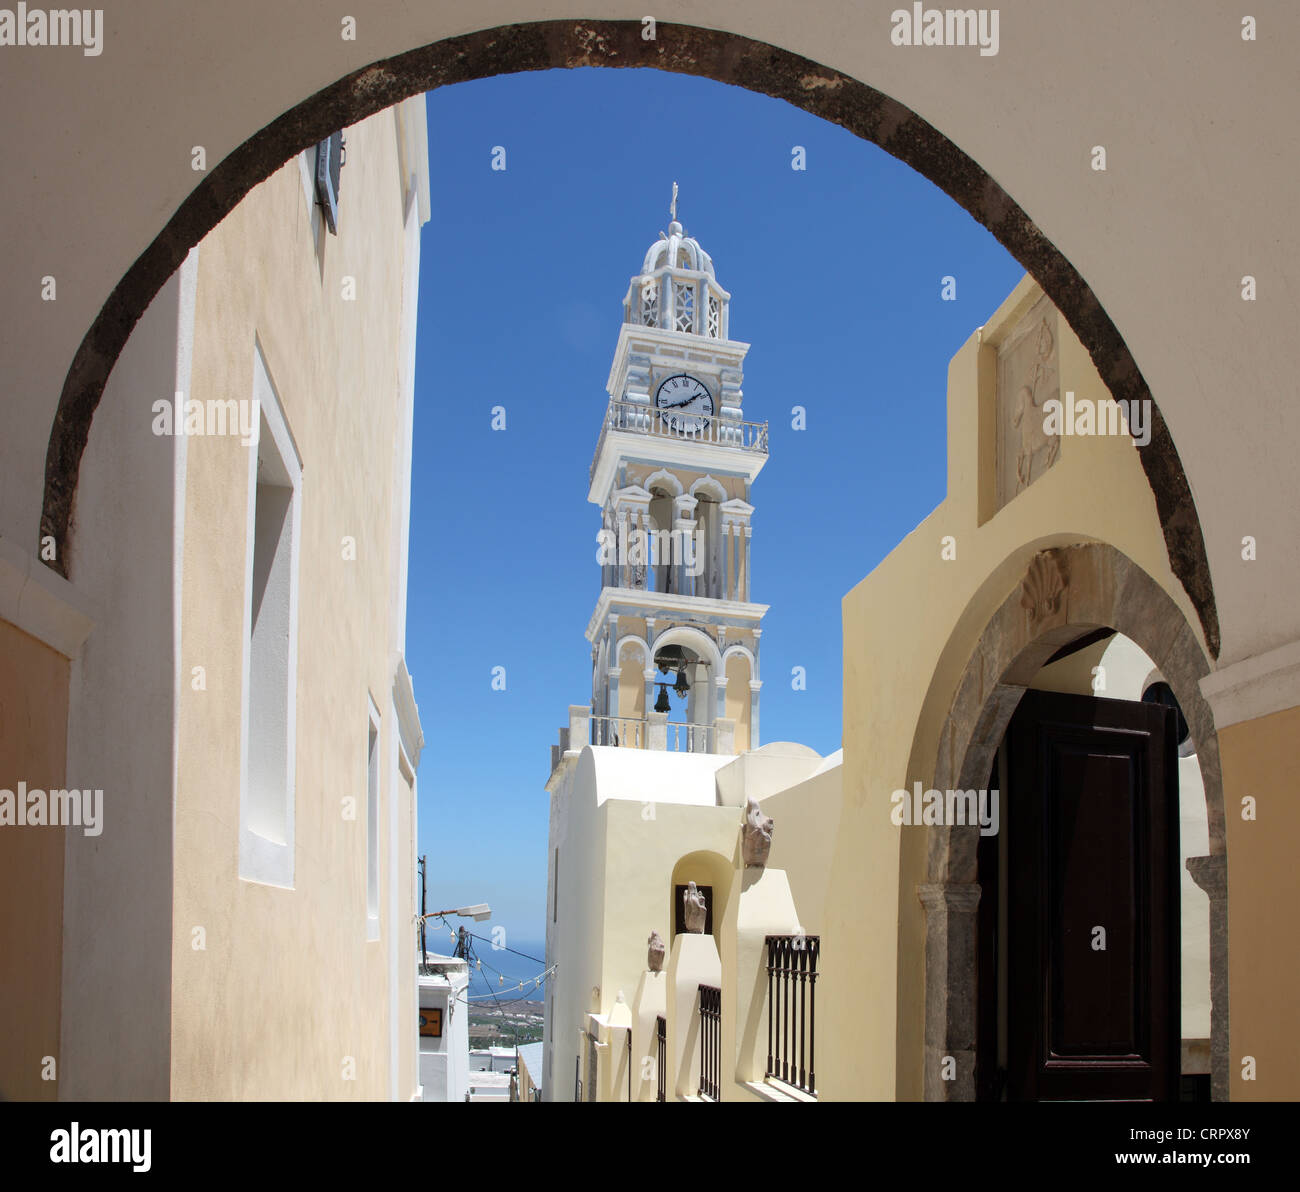 The bell tower of St John's Catholic Church, Fira, Santorini, Greece Stock Photo